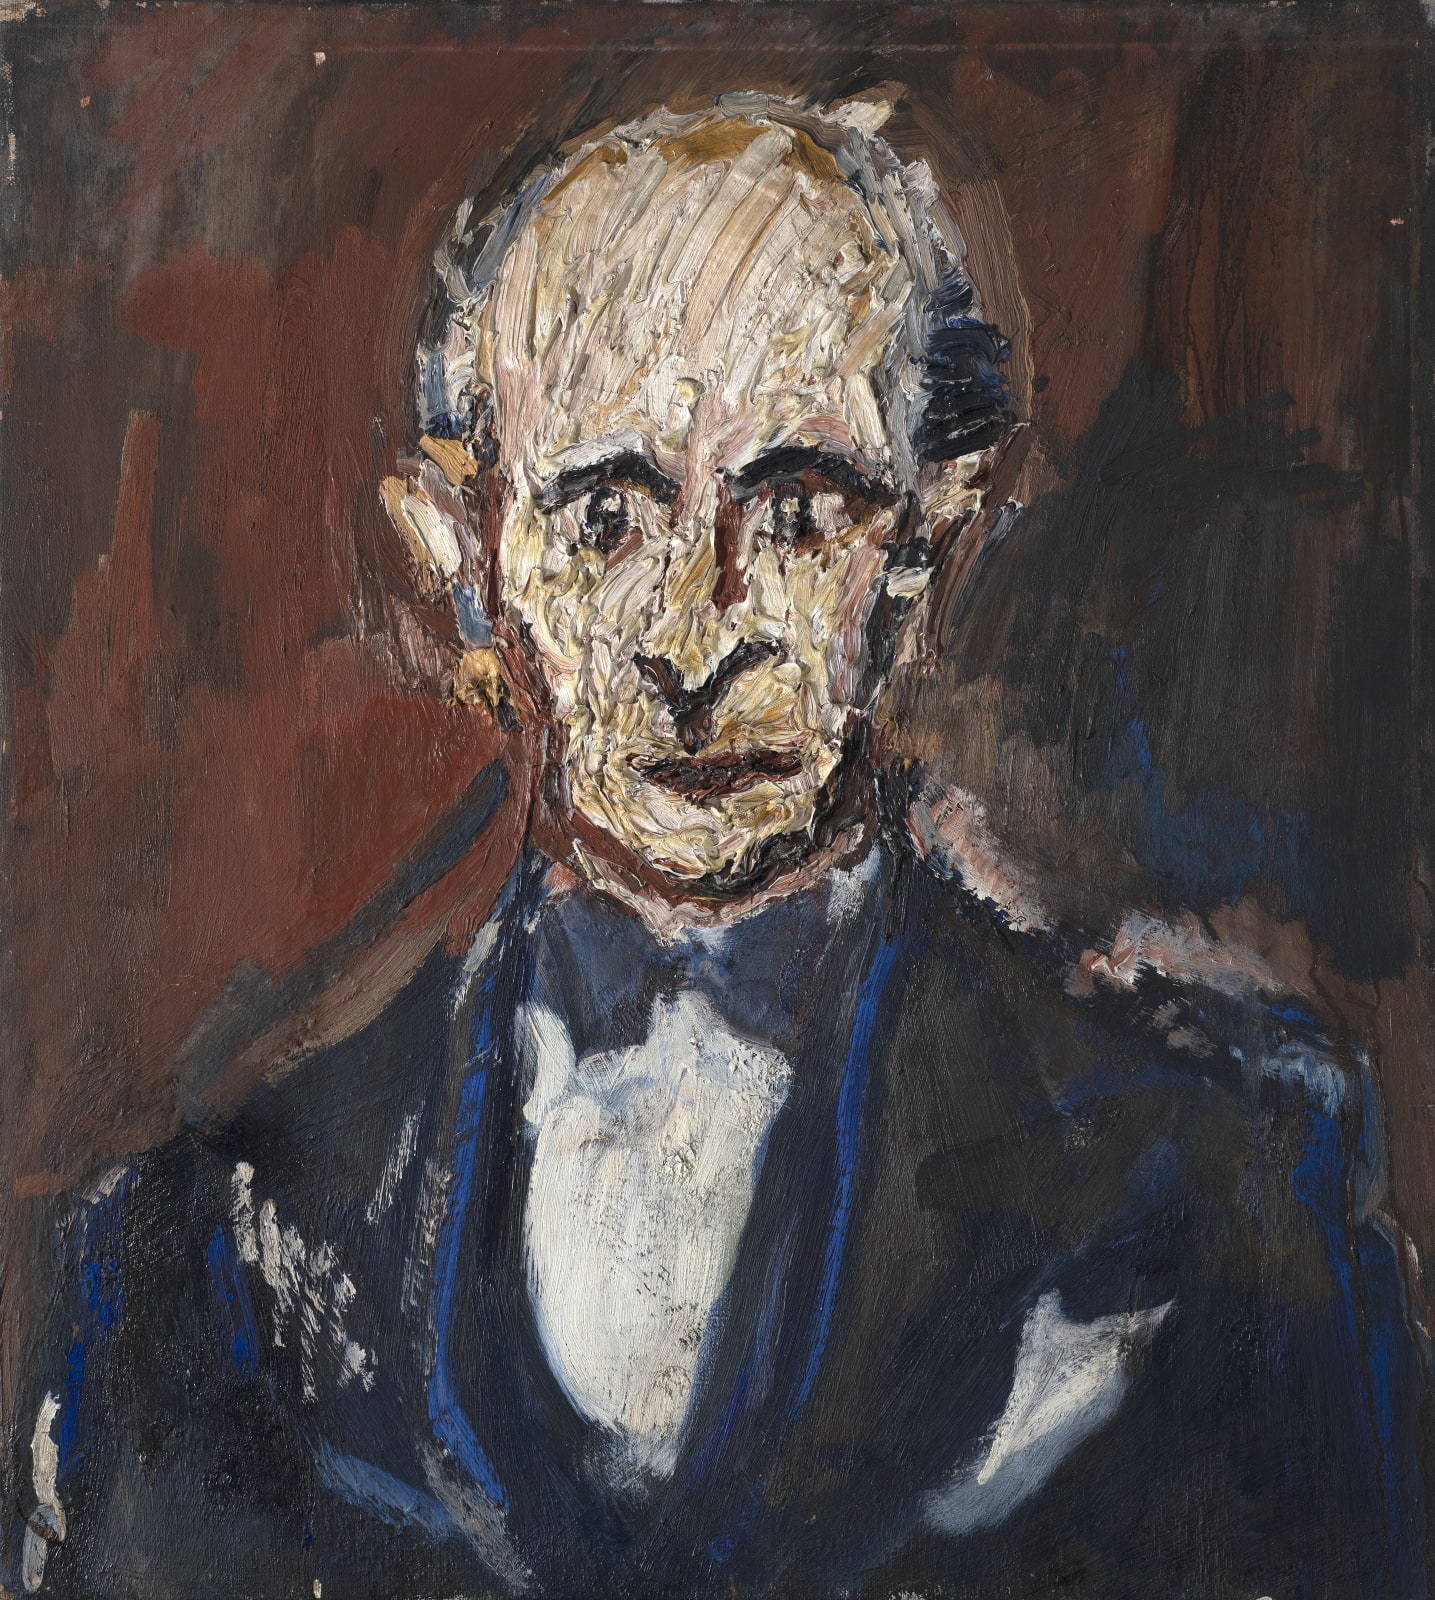 Head of E. Royalton-Kisch, 1950 Oil on canvas 69.4 x 62.2cm The Gustav Metzger Foundation